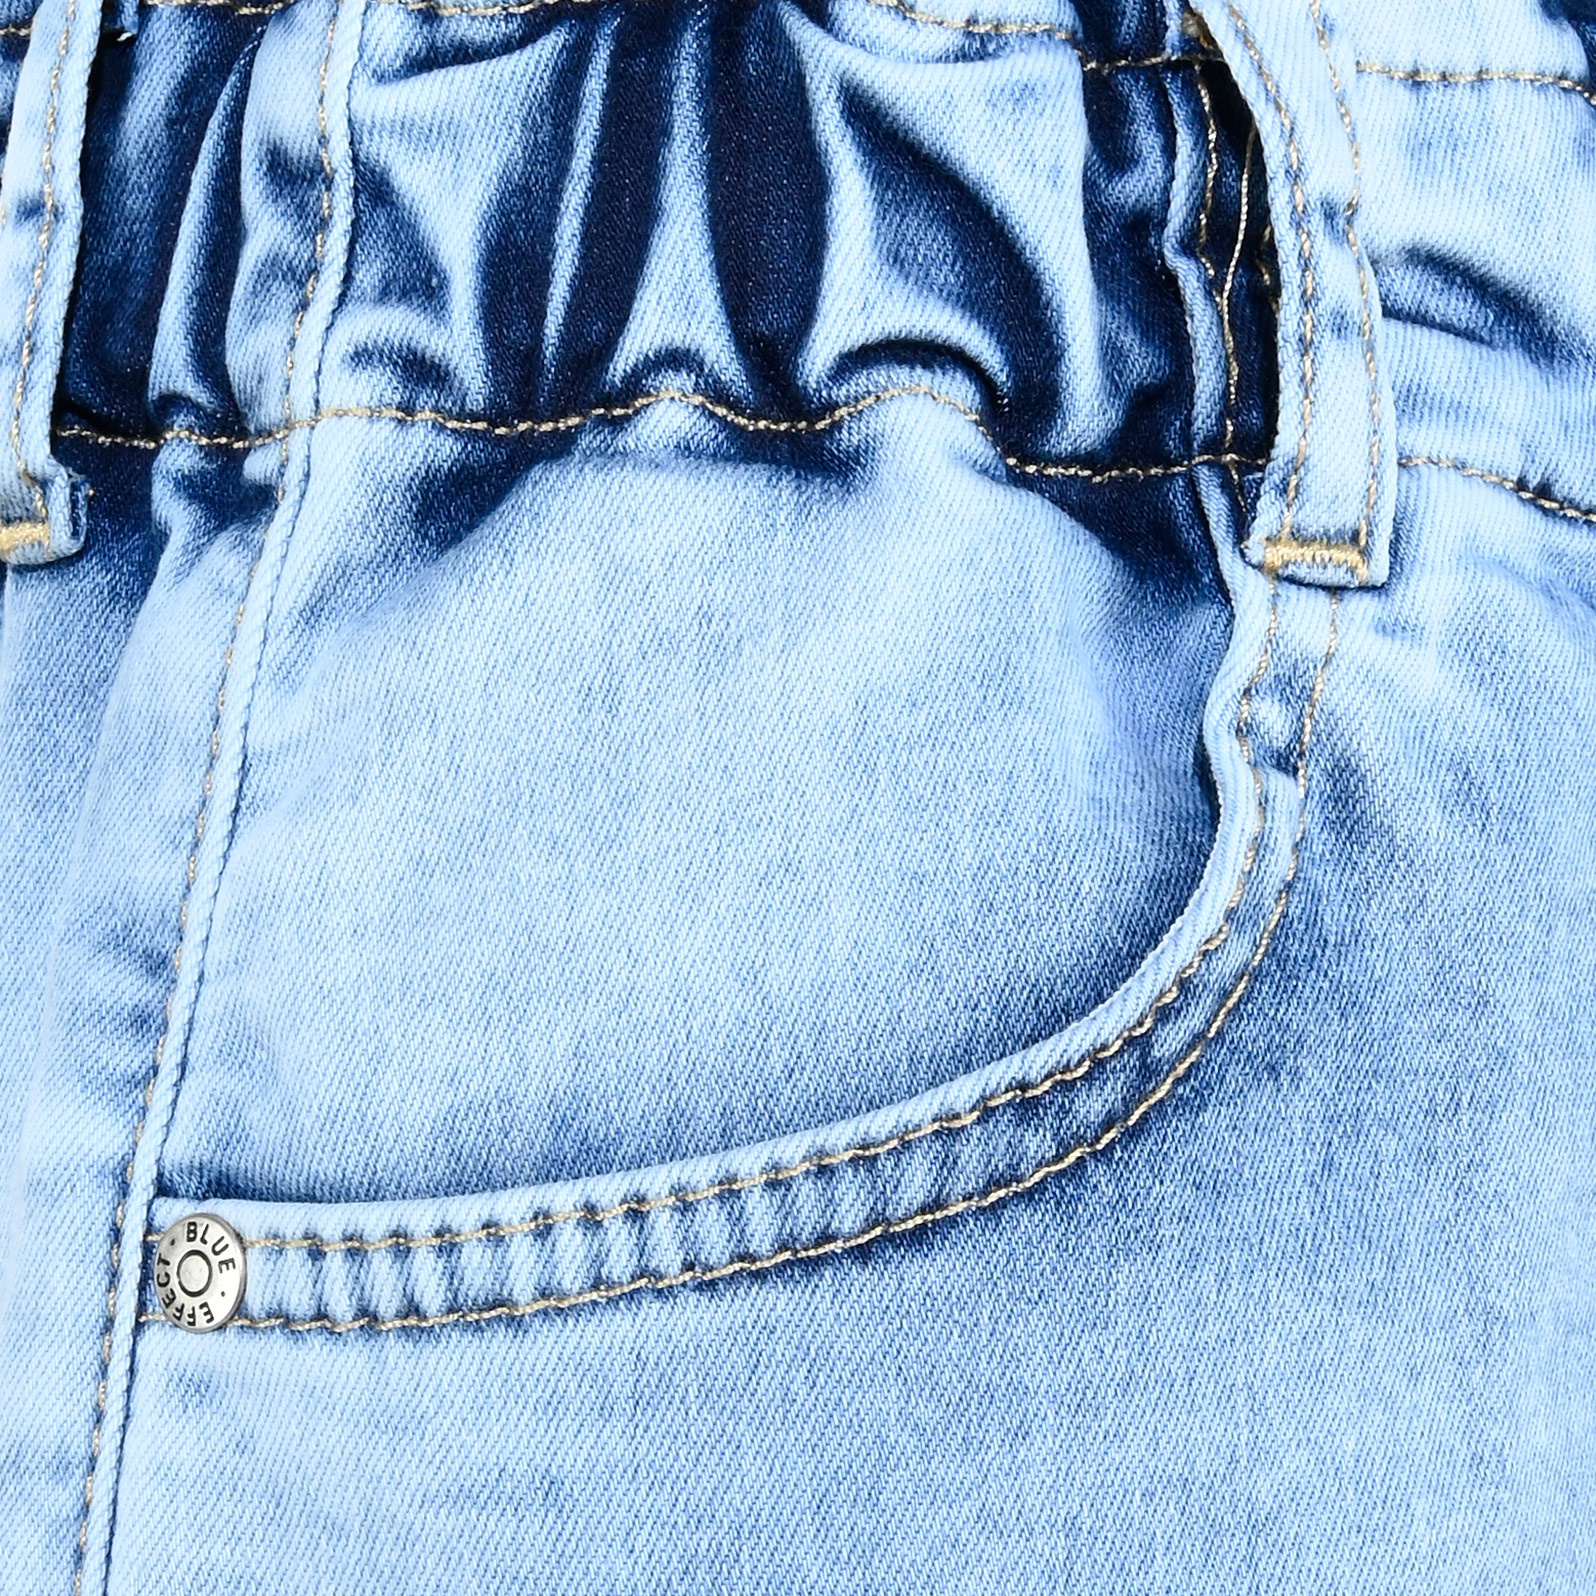 1299-Girls Balloon Fit Jeans Paperbag, Cropped, verfügbar in Slim, Normal